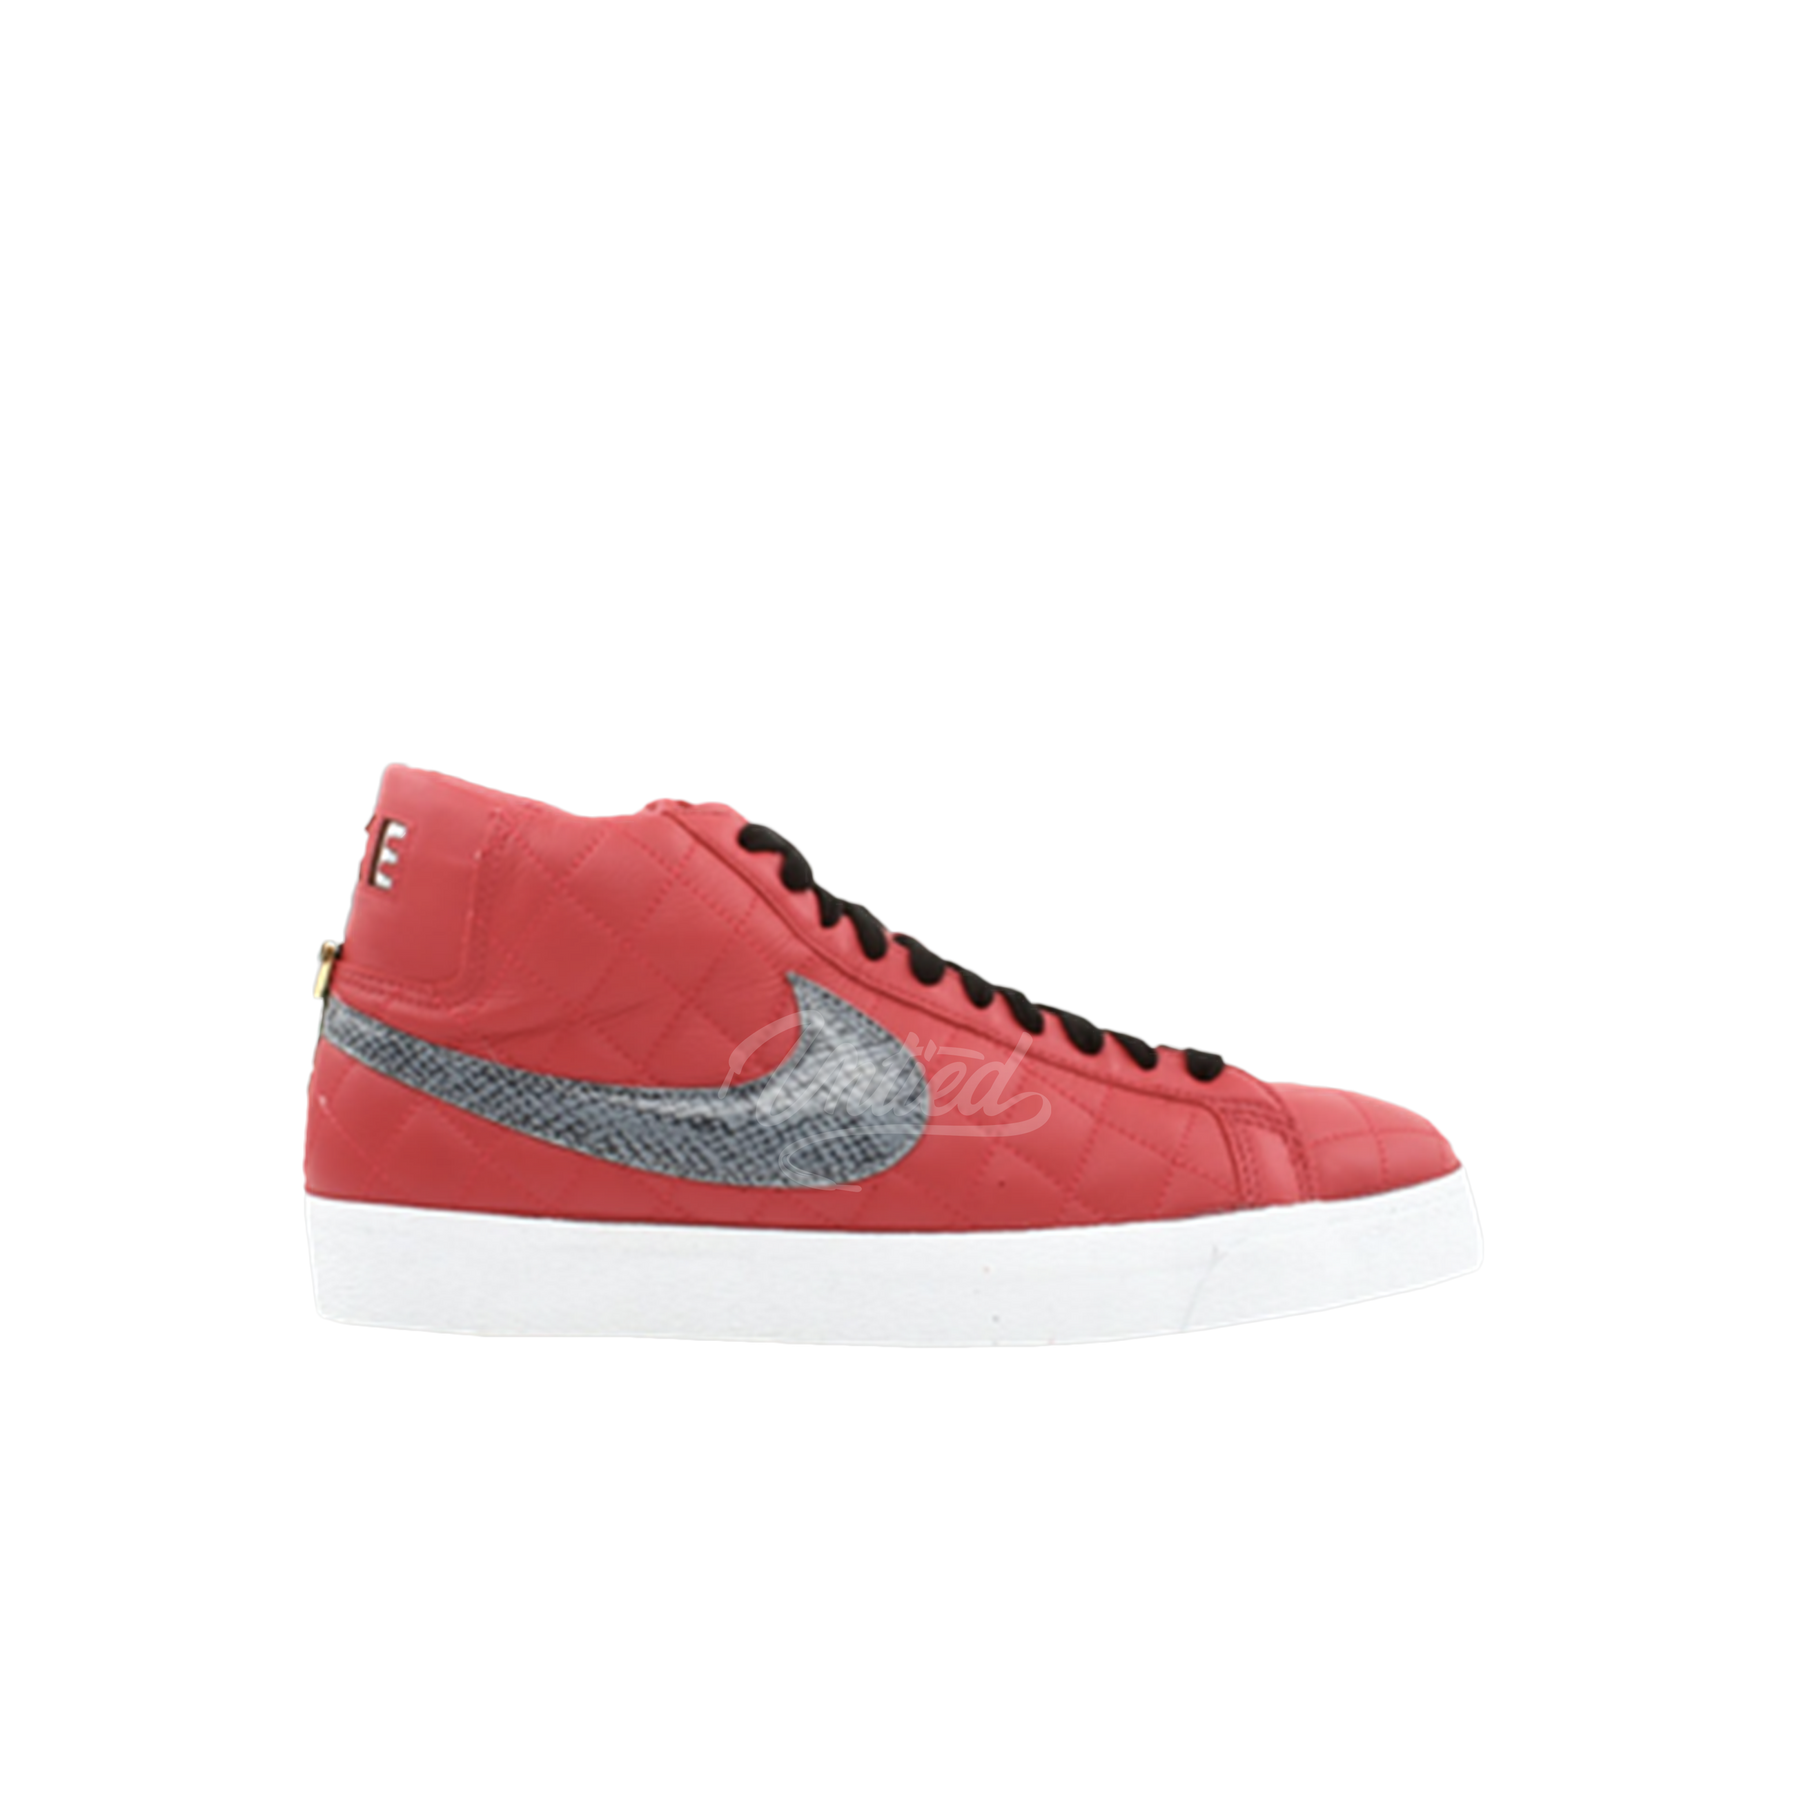 Supreme Nike Blazer SB "Red" (2006)